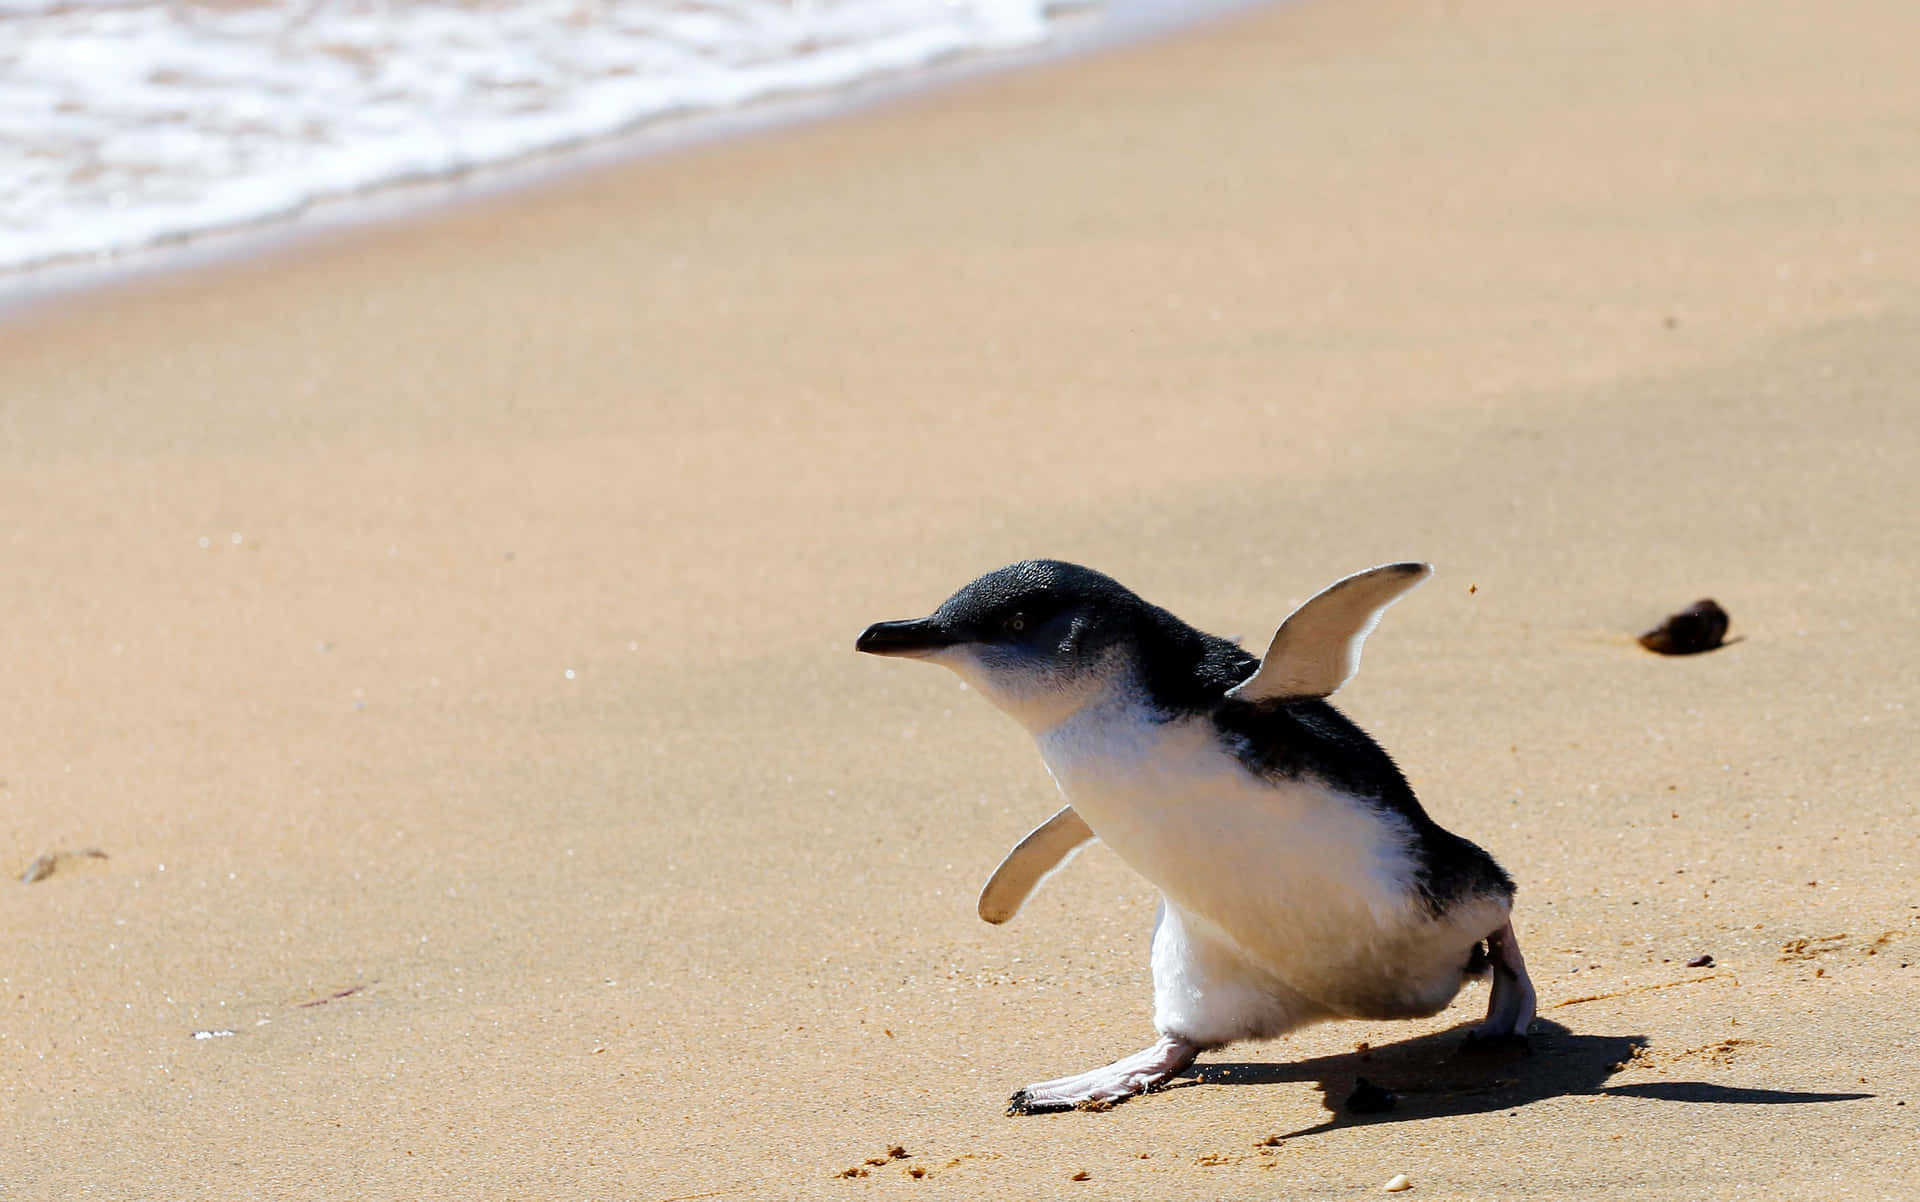 An adorable baby penguin enjoying the moment!